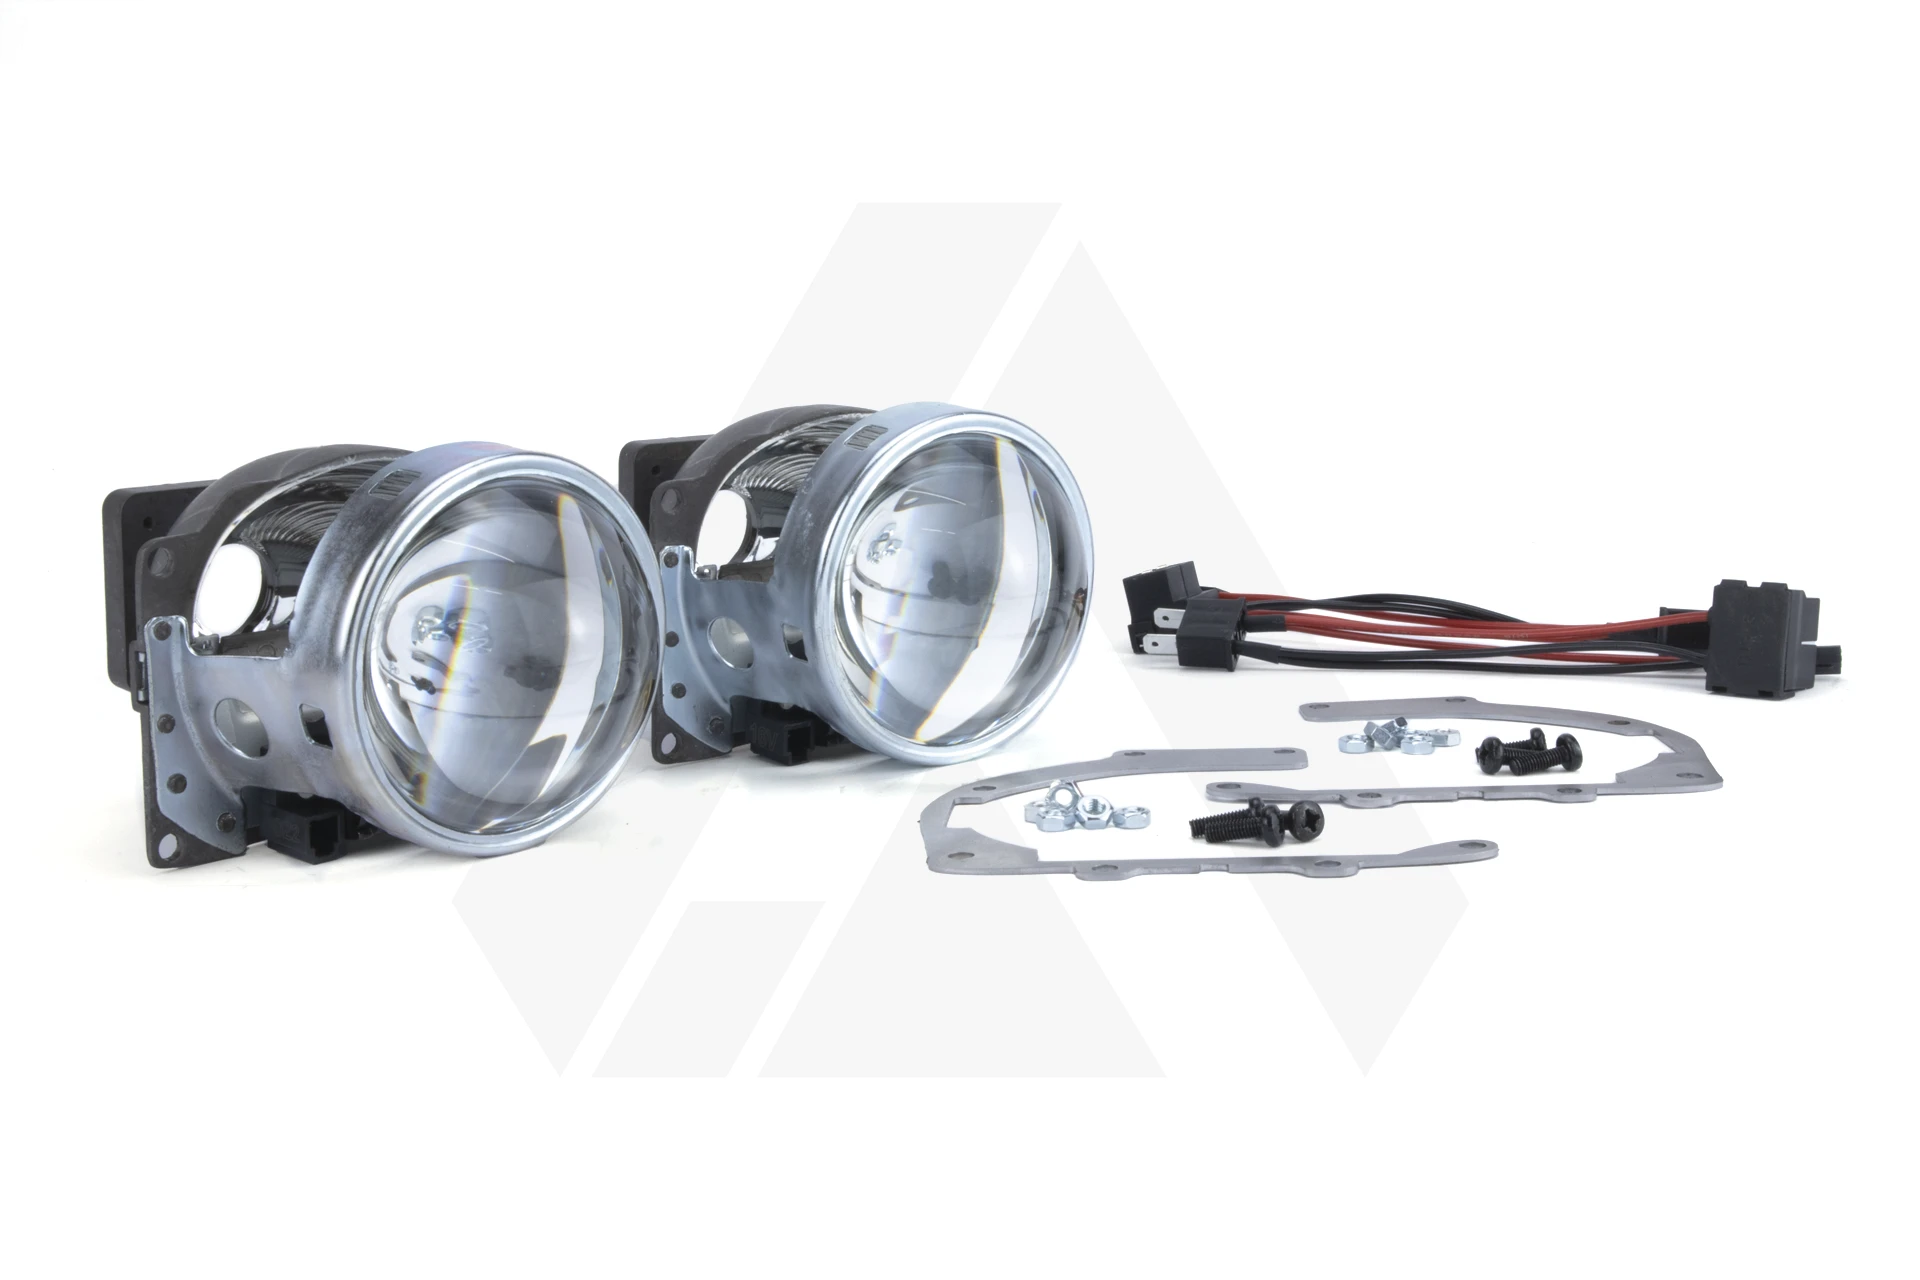 Volkswagen Touareg 07-10 bi-xenon headlight repair & upgrade kit for xenon HID headlights (VALEO D1S headlights)